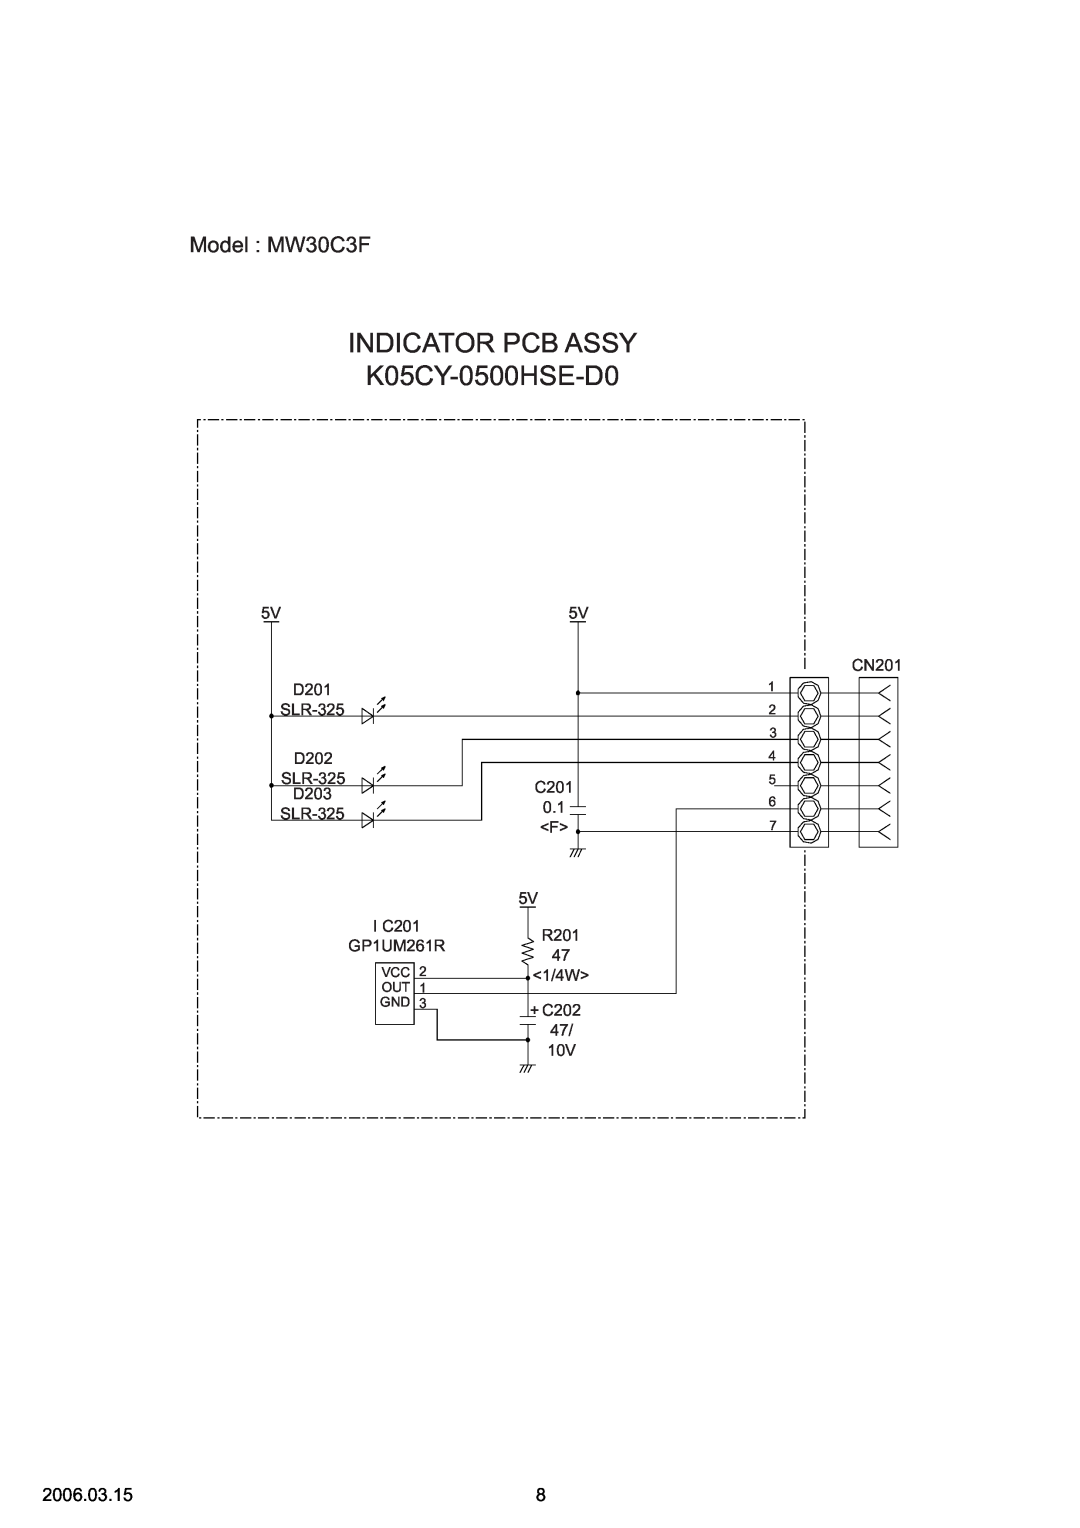 Friedrich MR30C3F specifications INDICATOR PCB ASSY K05CY-0500HSE-D0, Model MW30C3F, 2006.03.15, 1/4W, CN201 